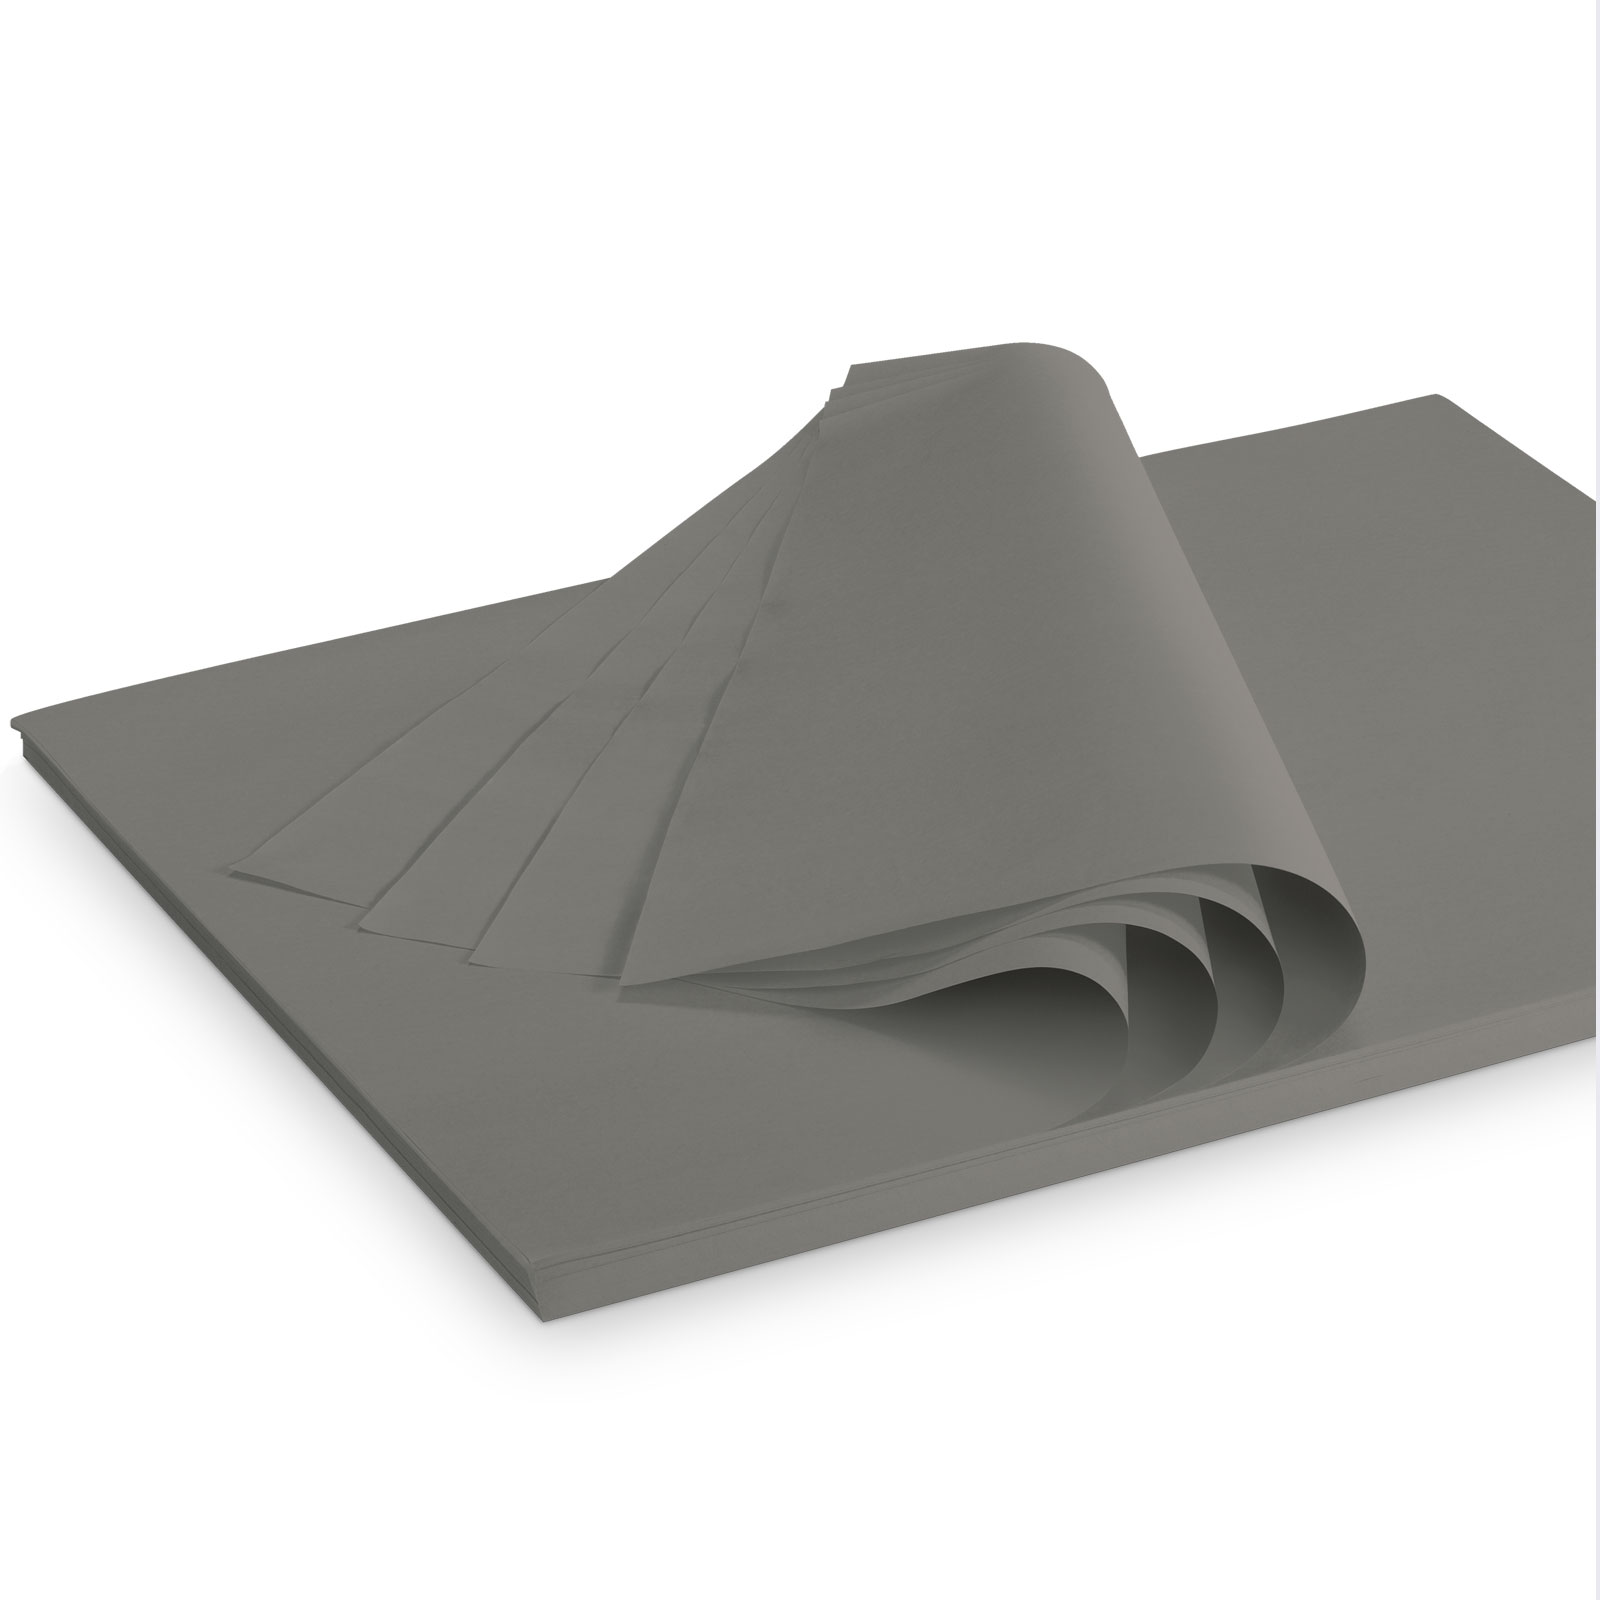 Seidenpapier grau 375x500mm 35g/m²,300 Bogen/ Karton = 2kg